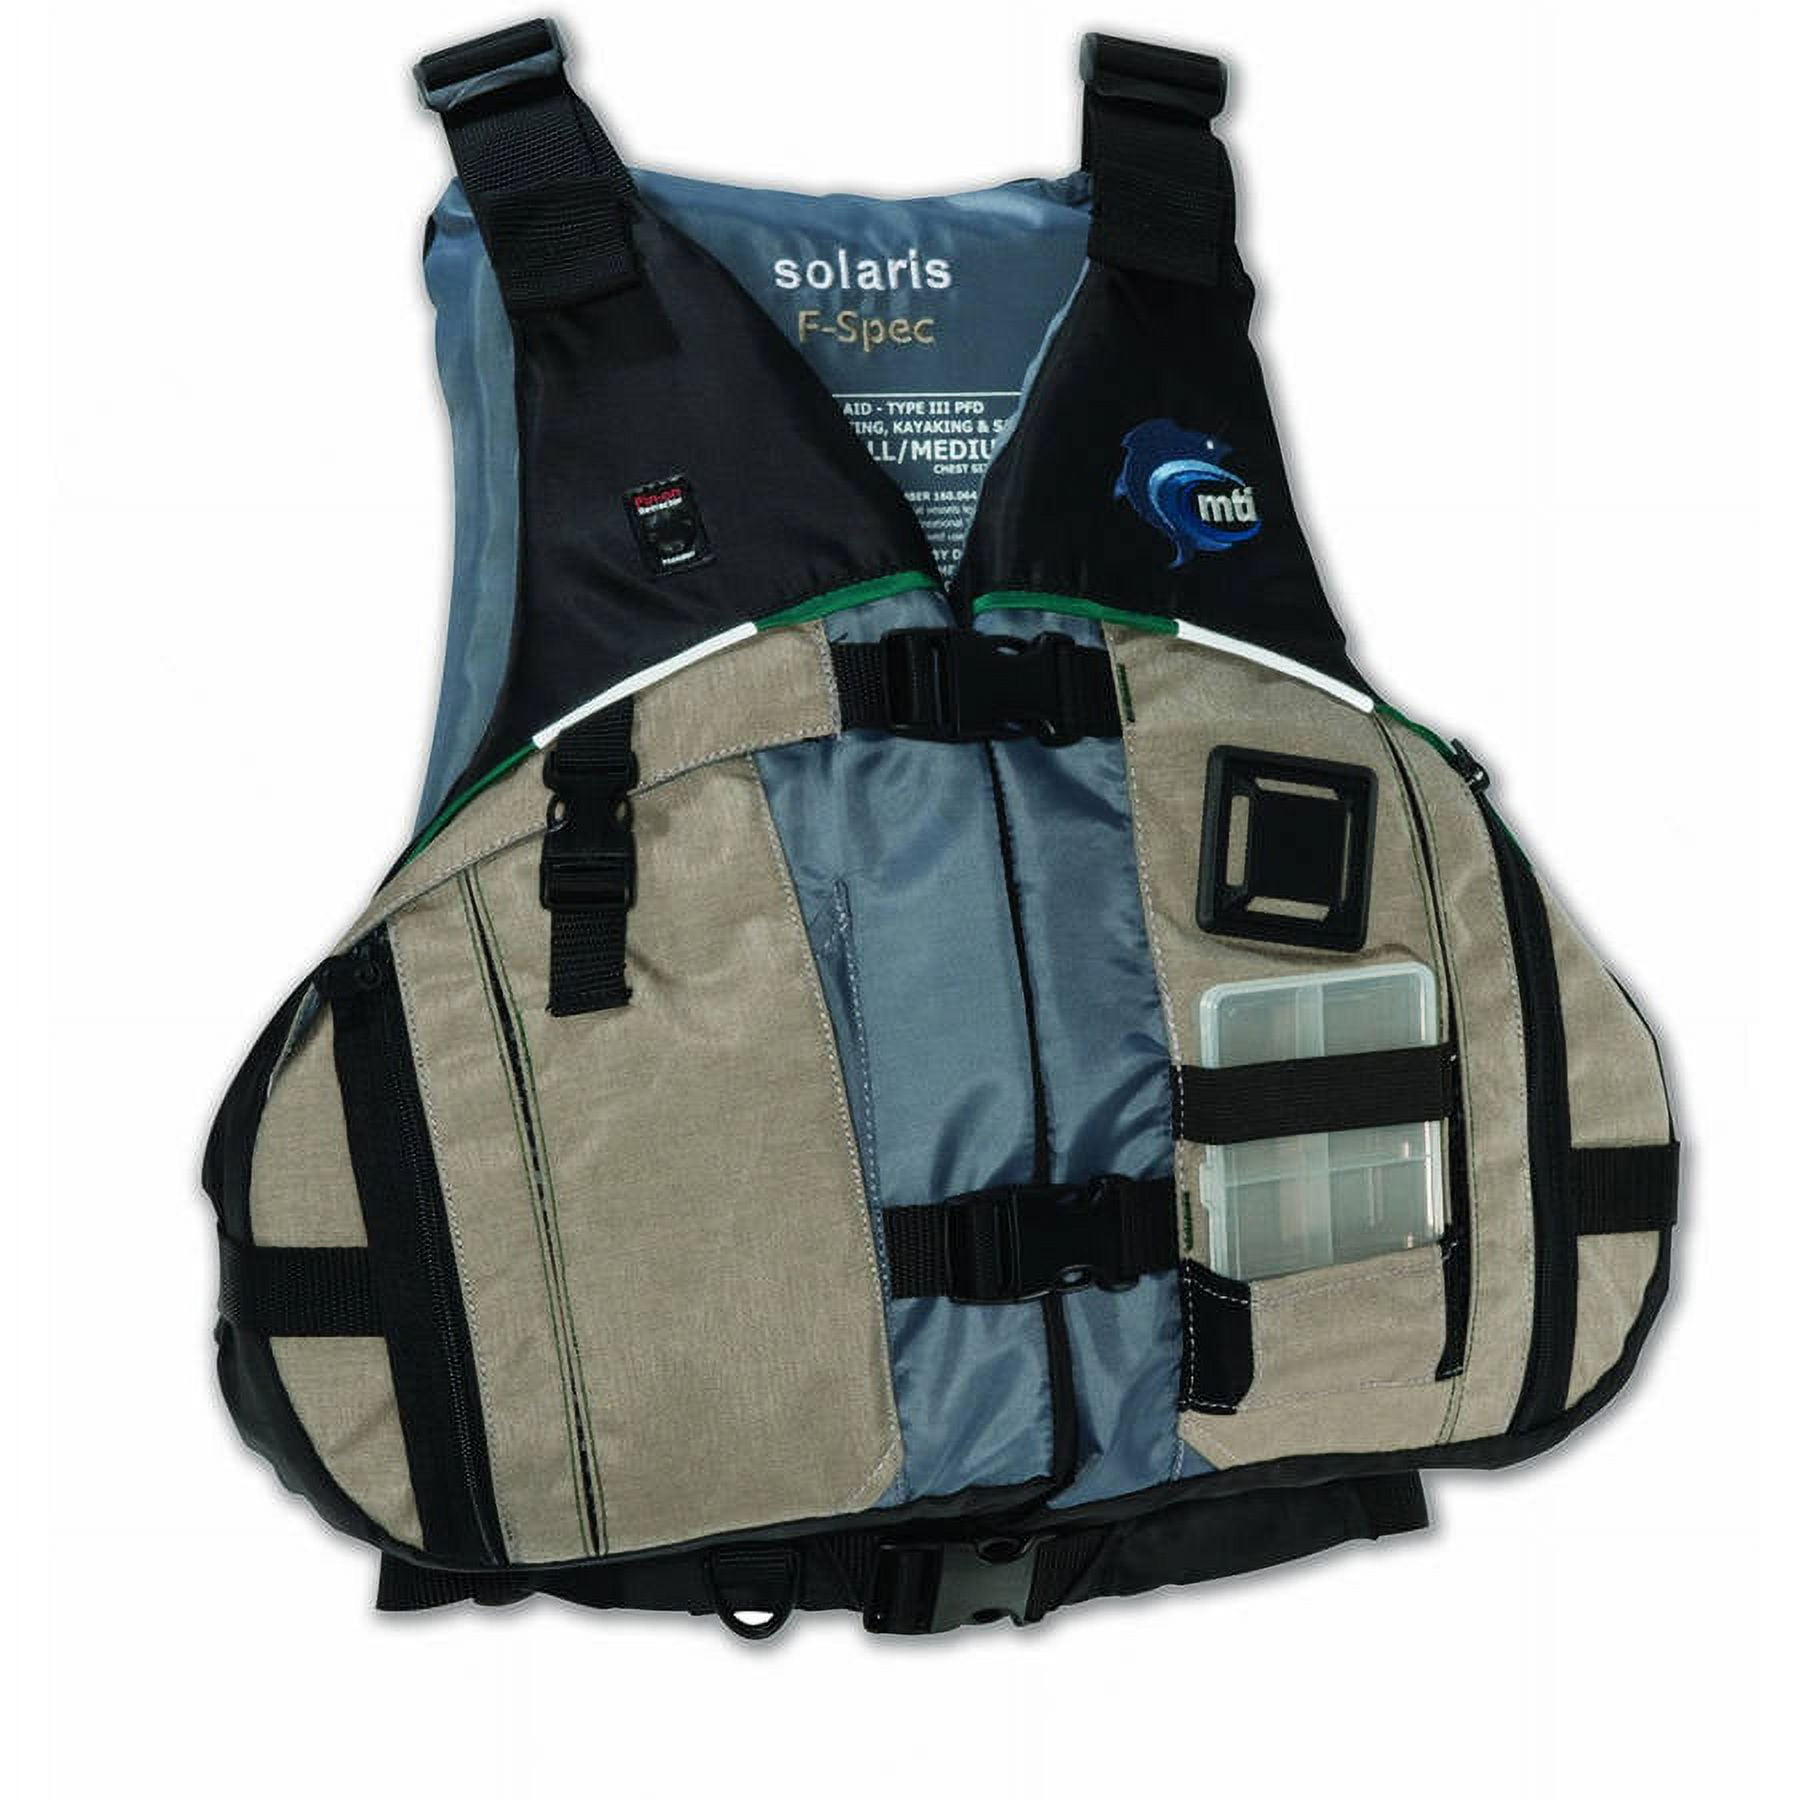 MTI Adventurewear Solaris F-Spec Kayak Fishing PFD Life Jacket